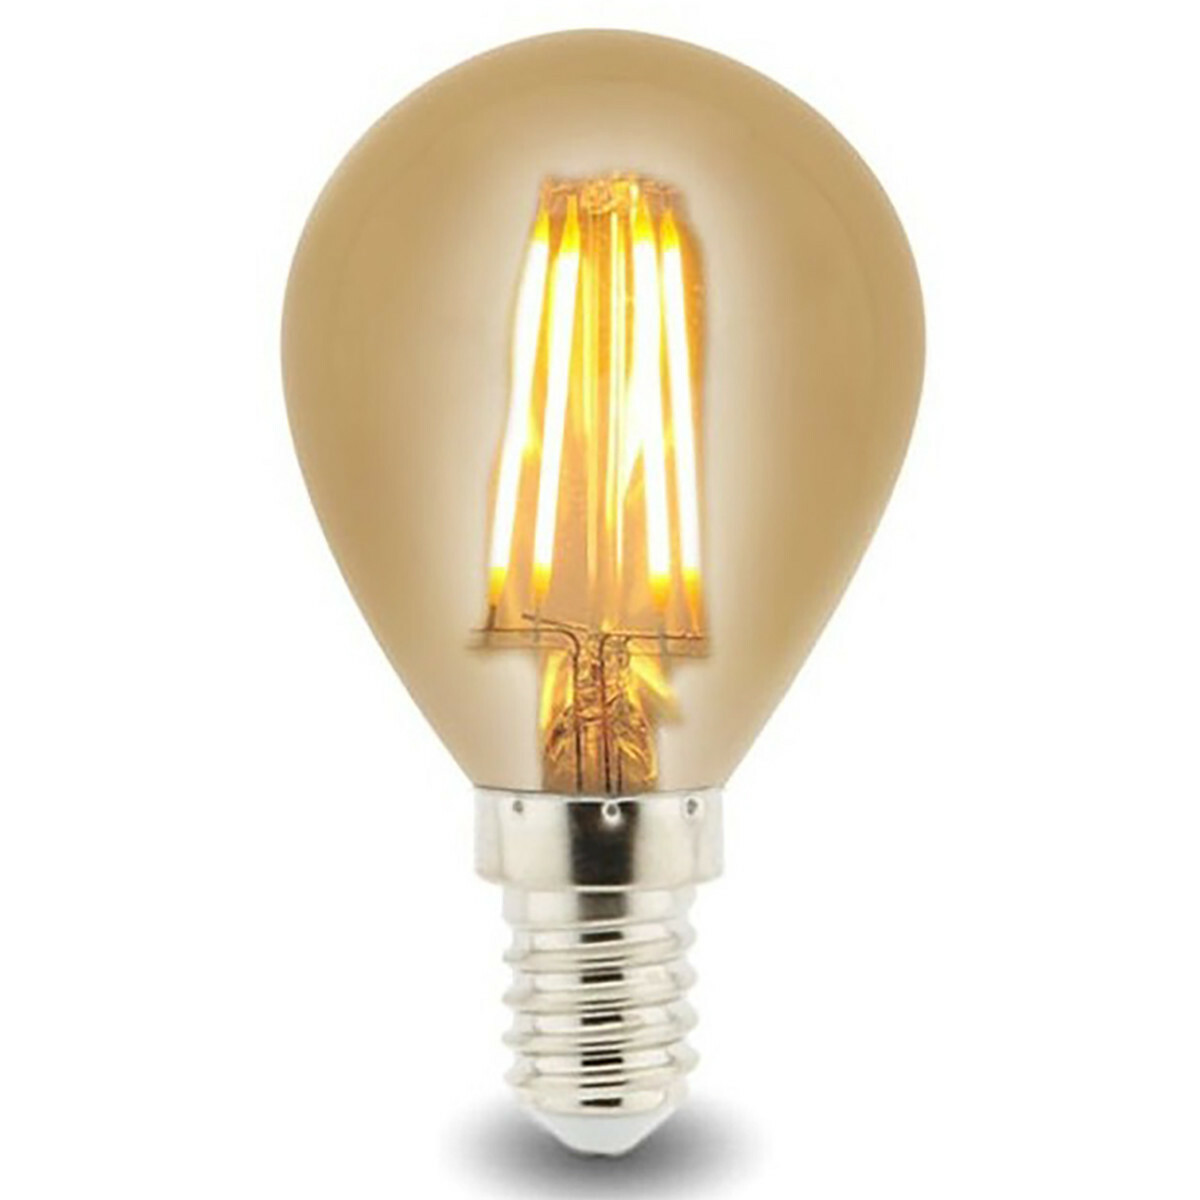 Groenten De andere dag Kijkgat Voordeelpak LED Lamp 10 Pack - Facto - Filament Bulb - E14 Fitting - 4W -  Warm Wit 2700K | BES LED